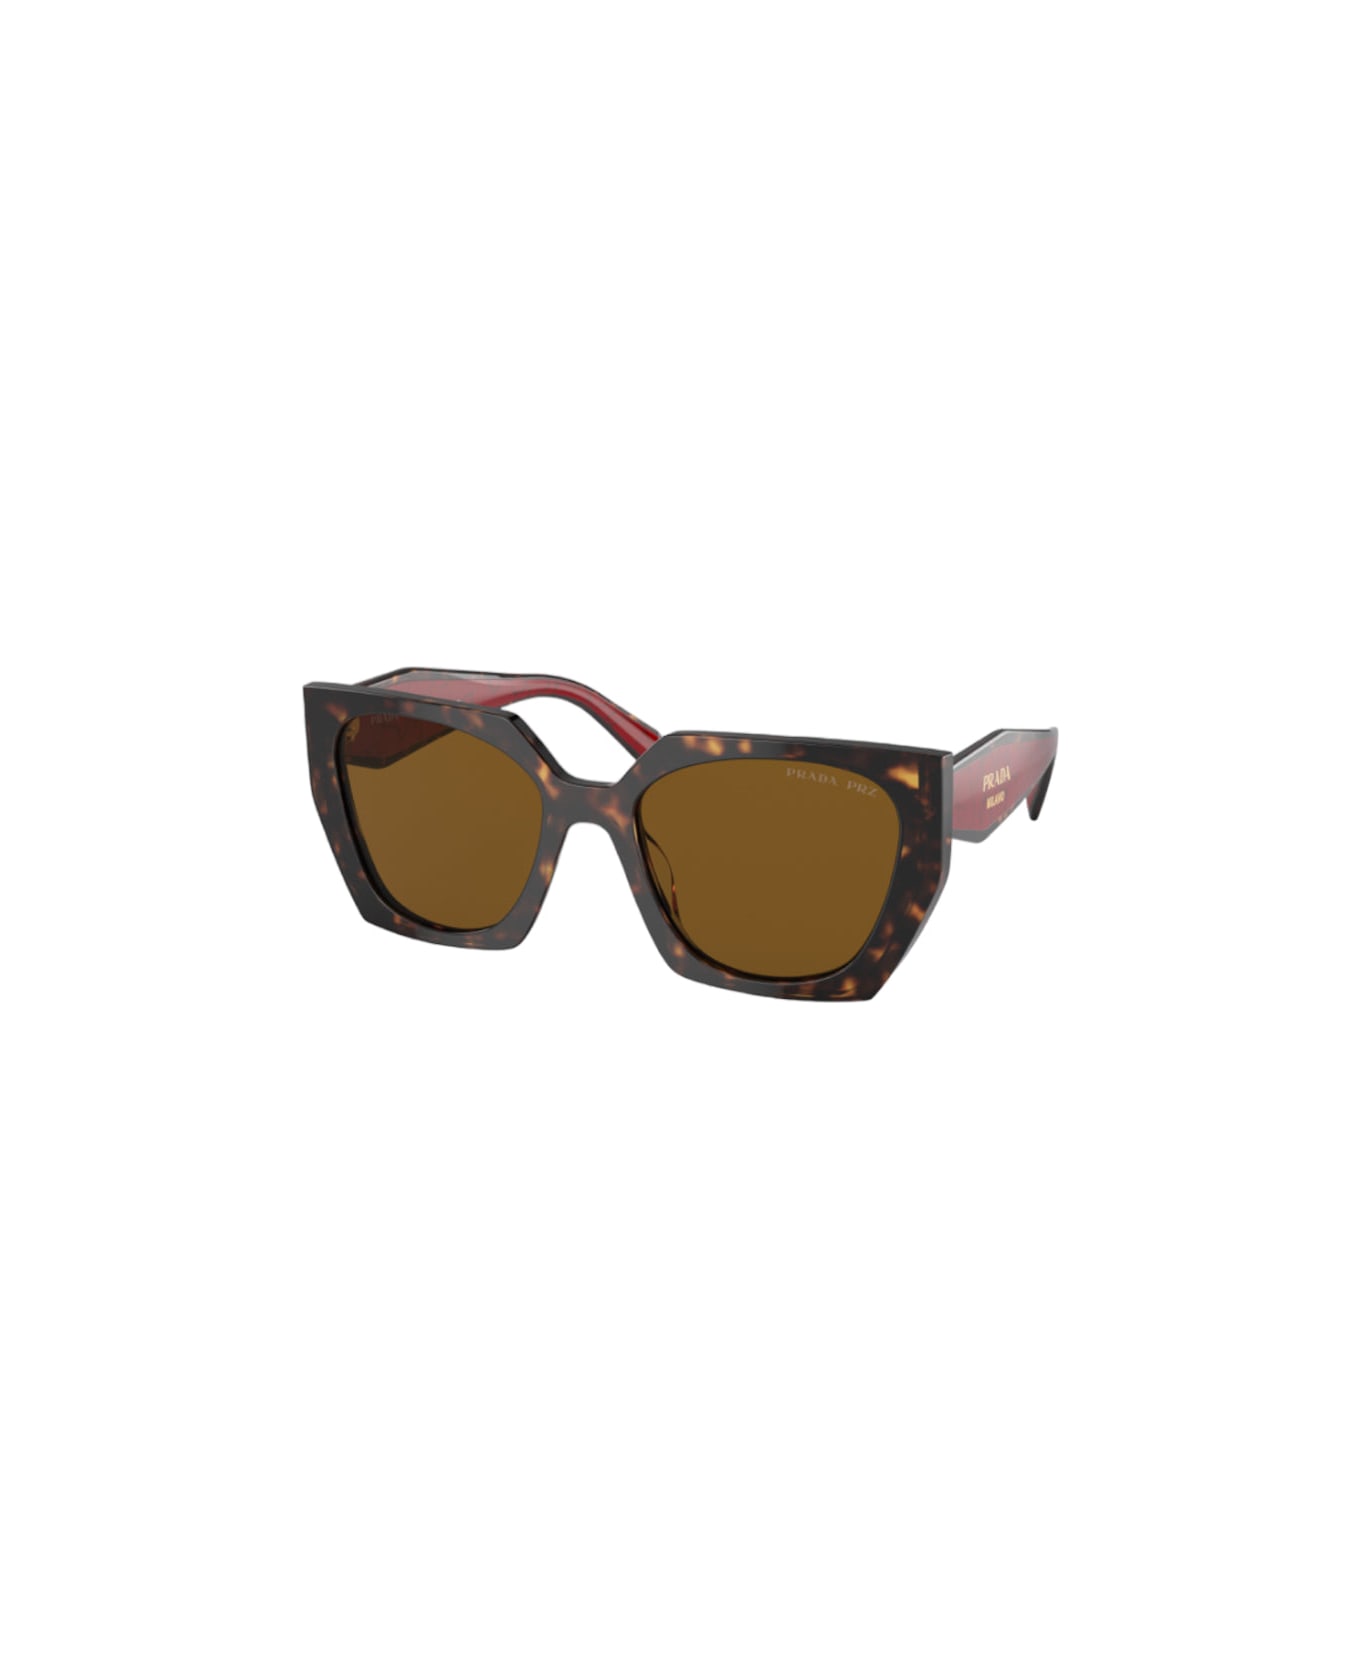 Prada Eyewear Spr 15w - Black Sunglasses サングラス